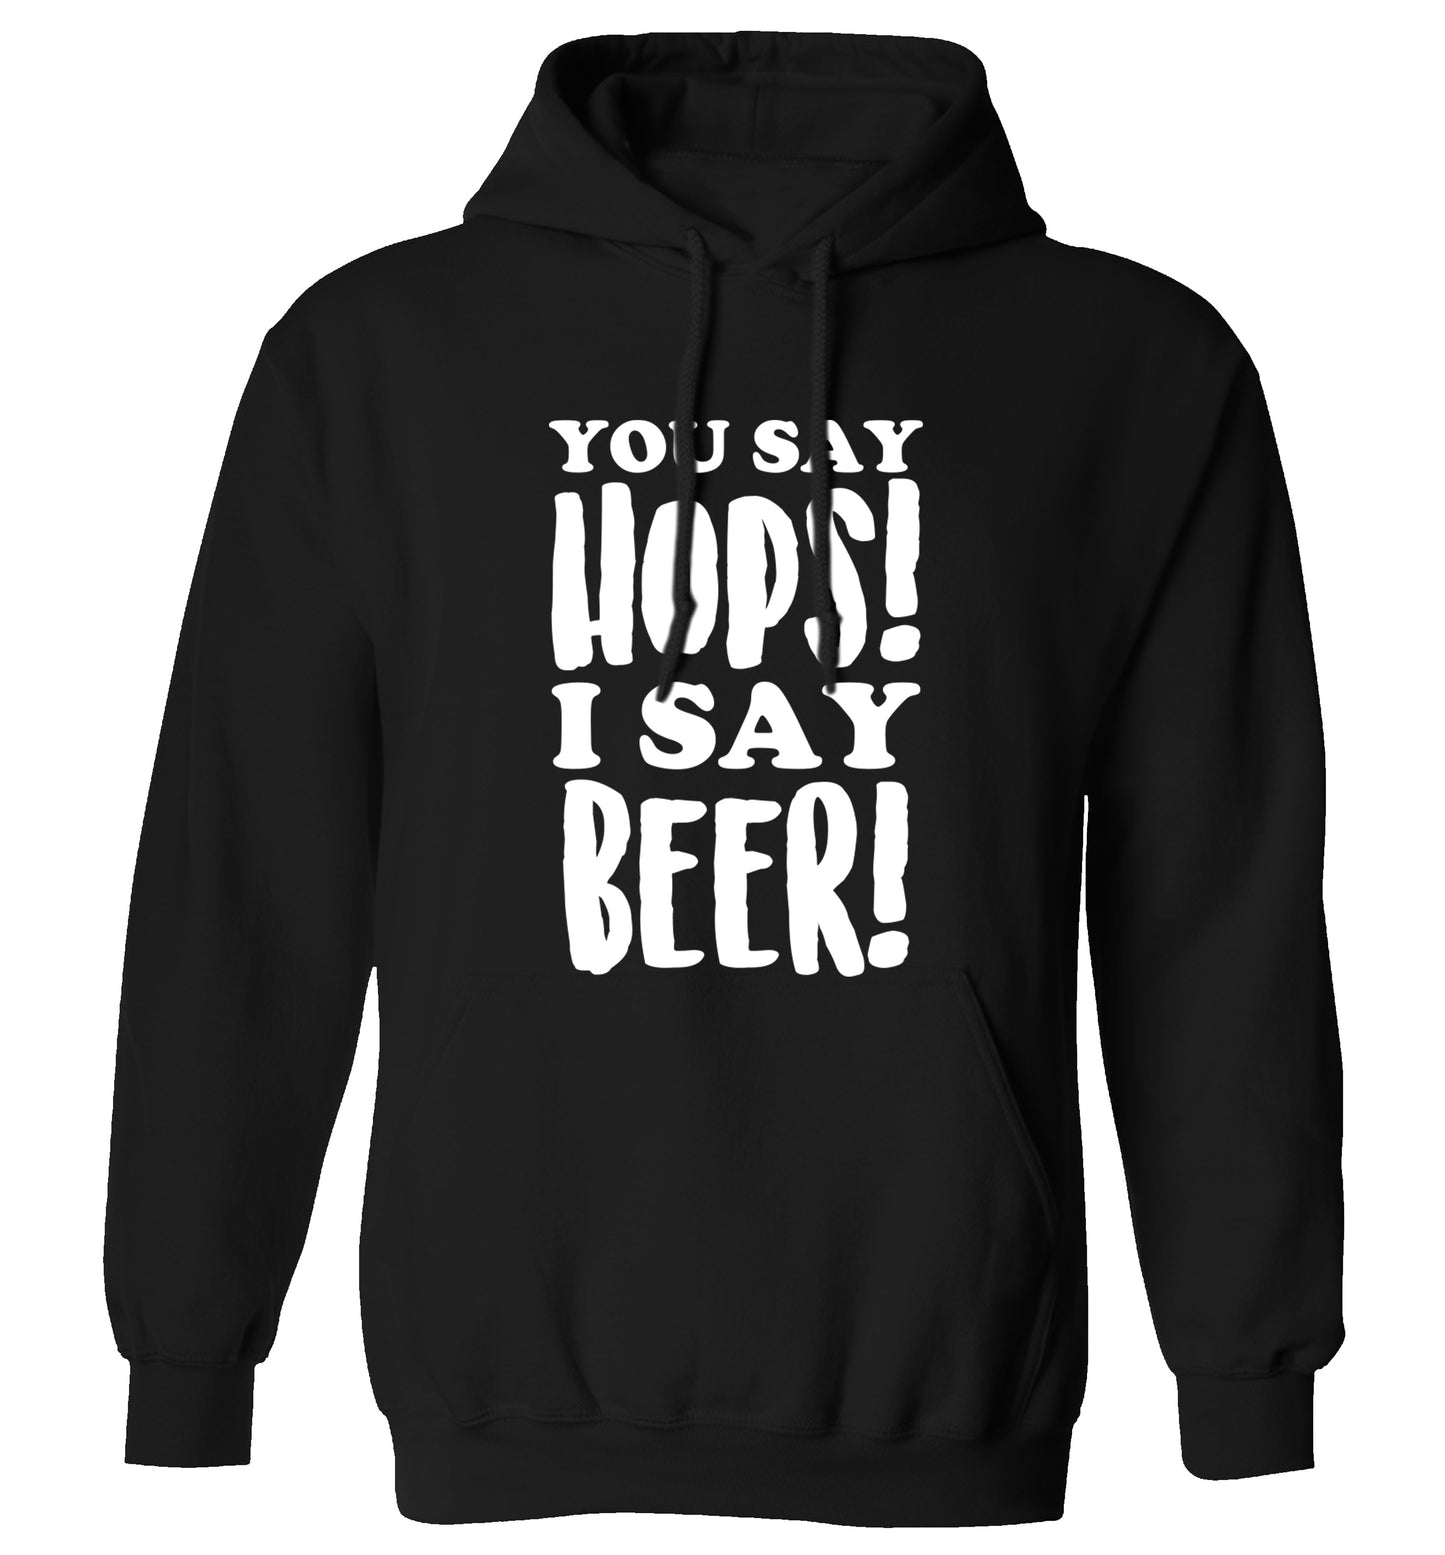 You say hops I say beer! adults unisex black hoodie 2XL